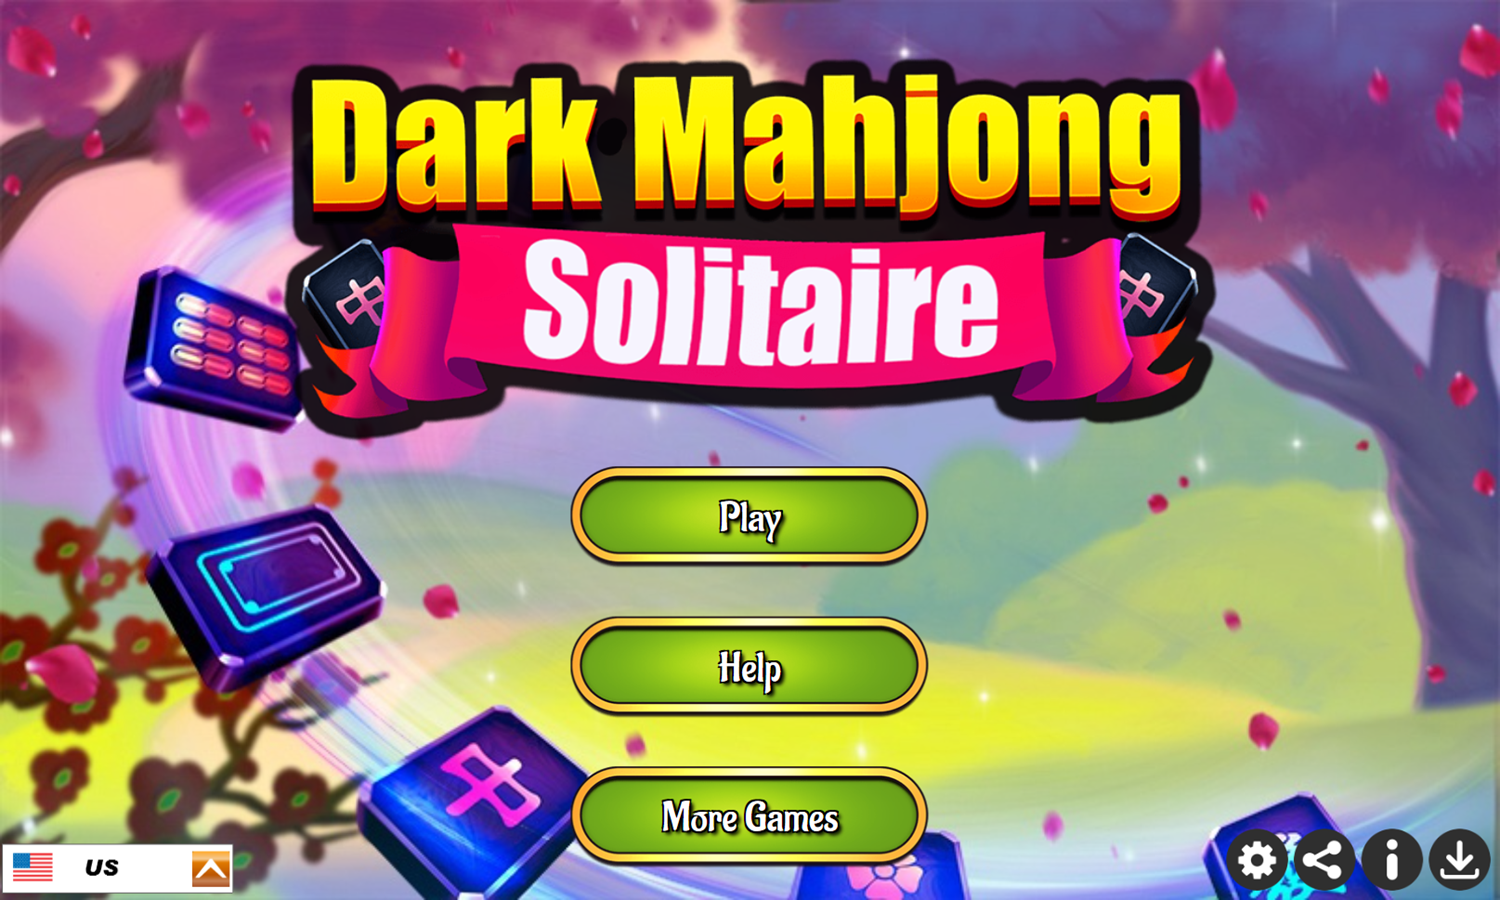 Dark Mahjong Solitaire Game Welcome Screen Screenshot.